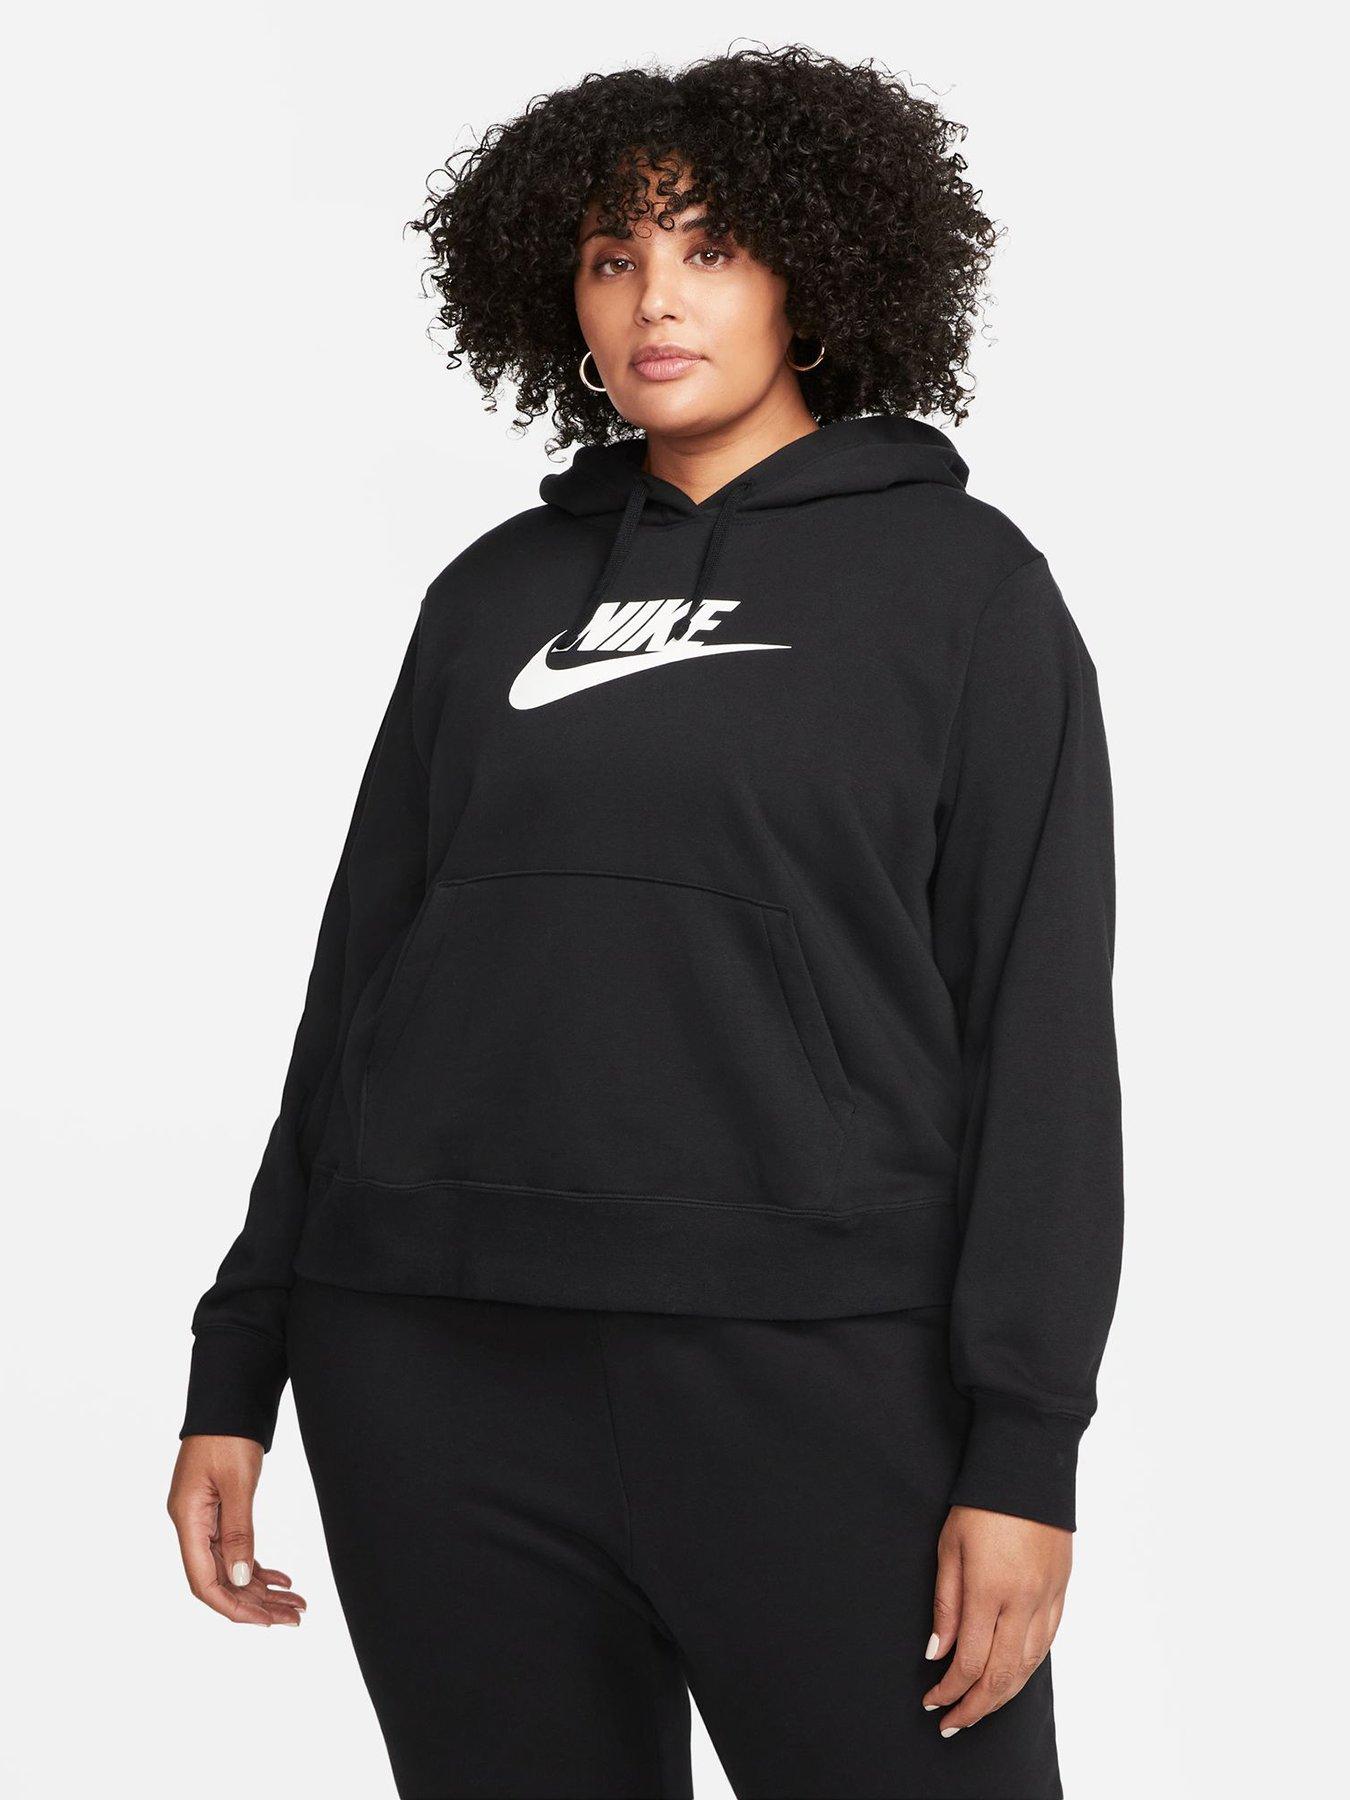 Plus Size, Nike, Hoodies & sweatshirts, Women